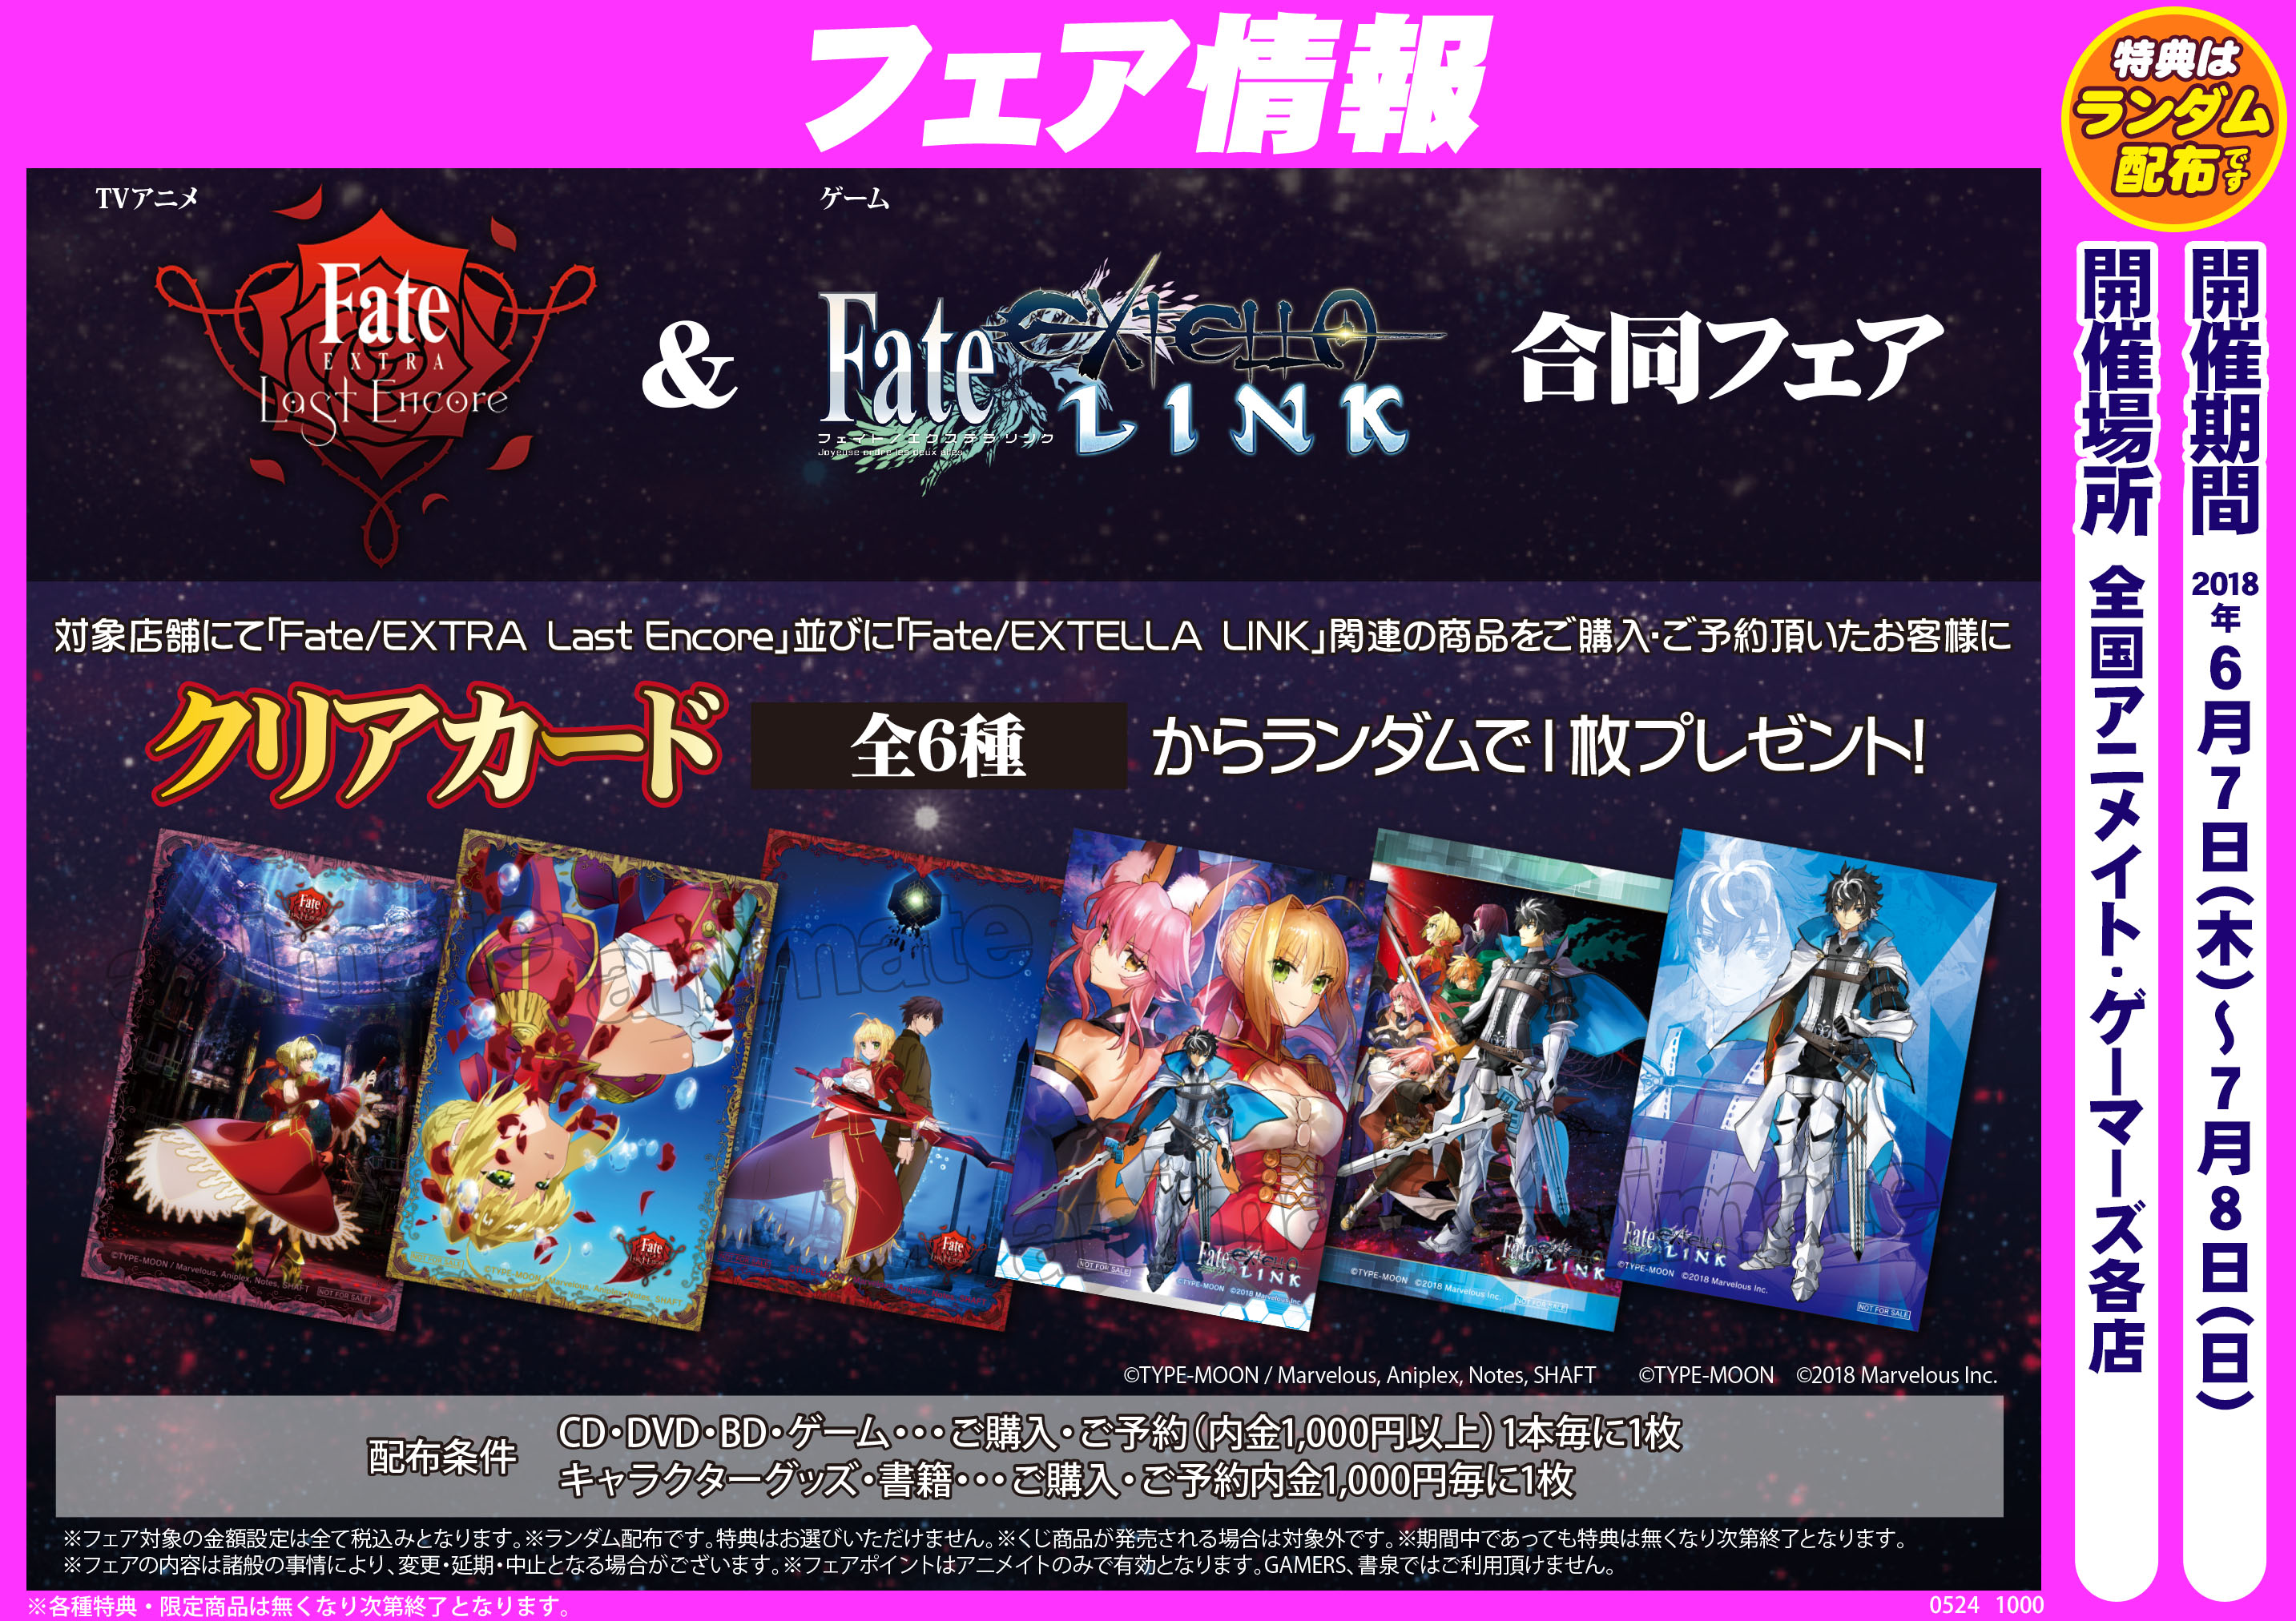 Tvアニメ Fate Extra Last Encore ゲーム Fate Extella Link 合同フェア アニメイト長崎